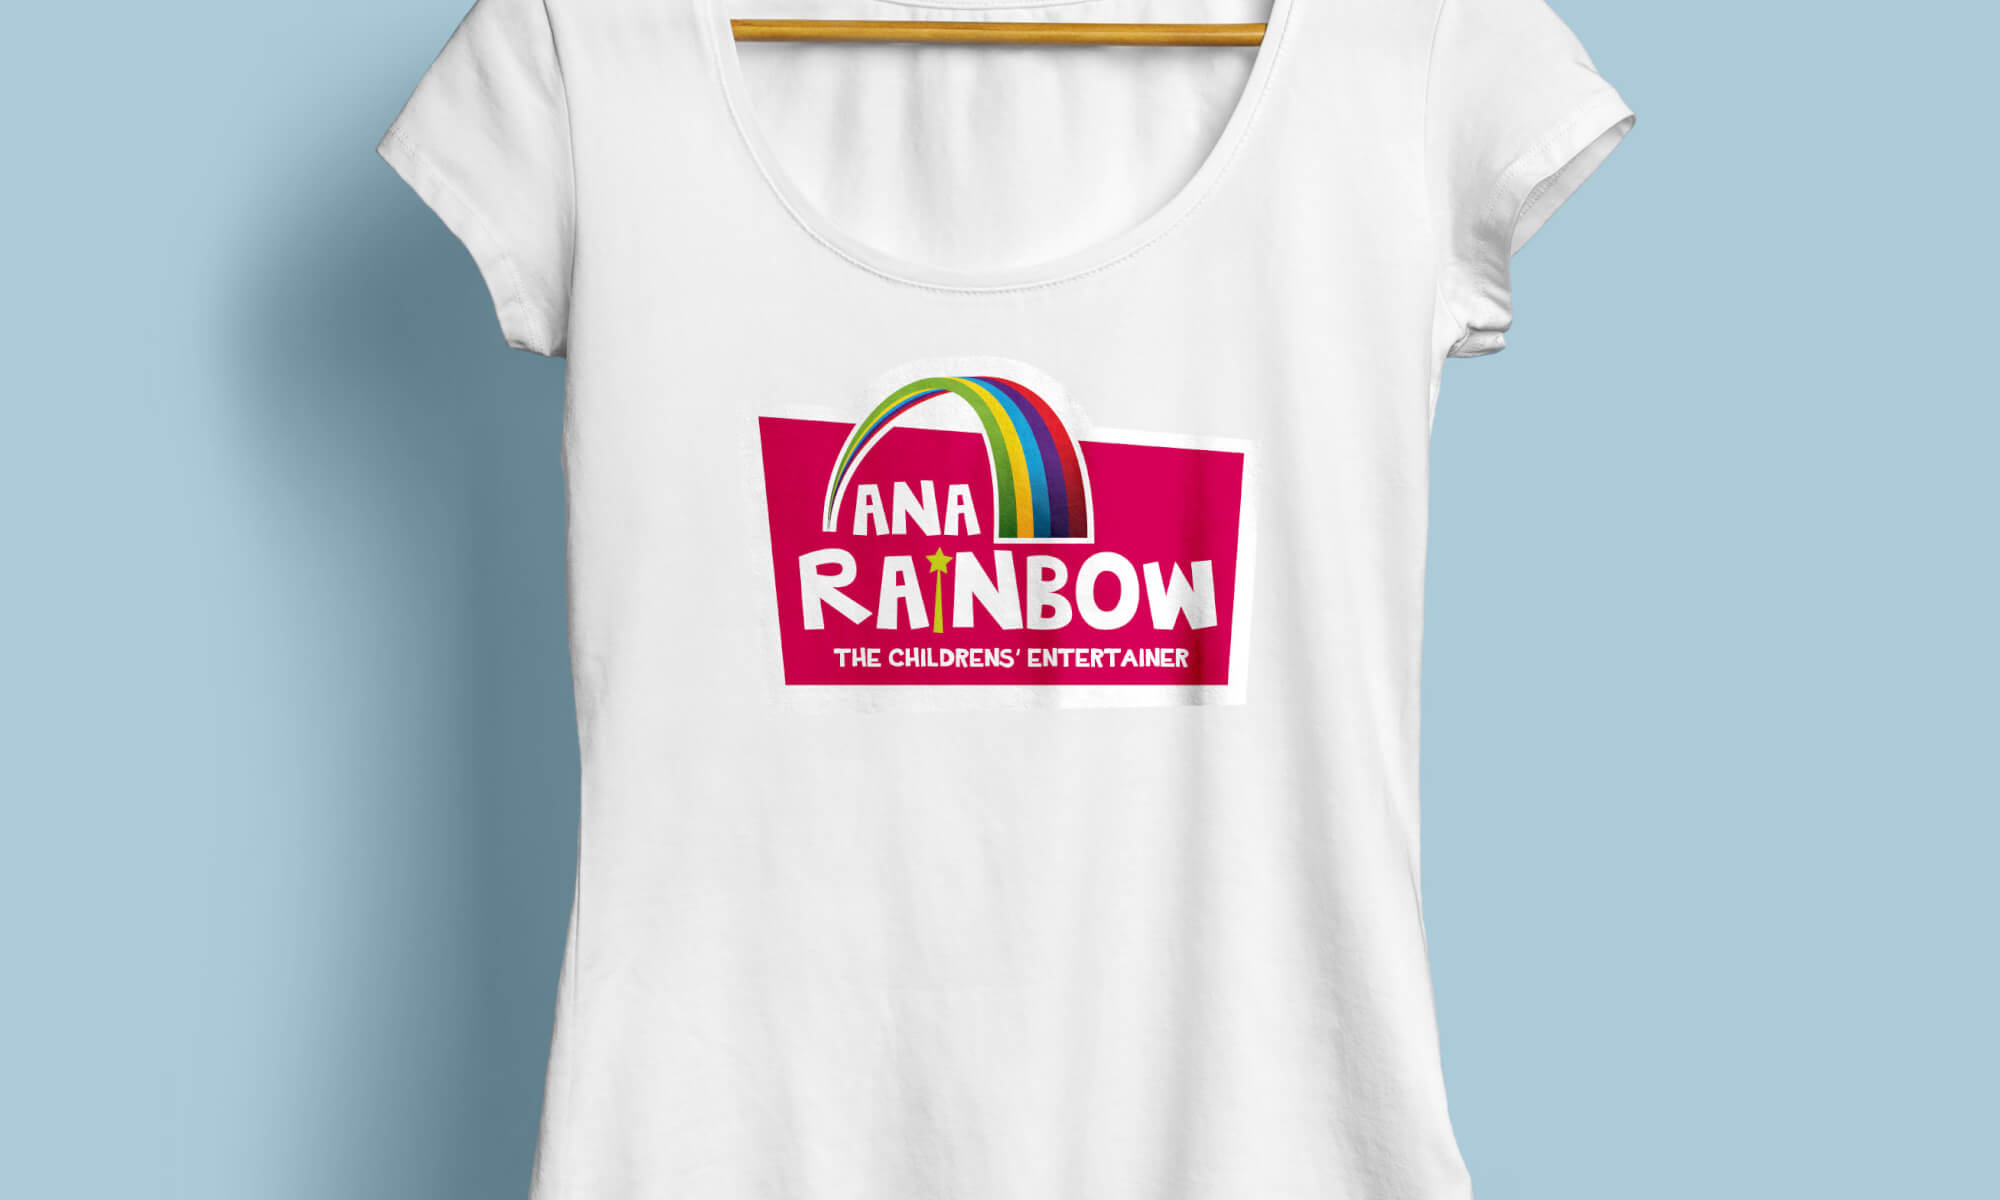 Ana Rainbow logo on t-shirt